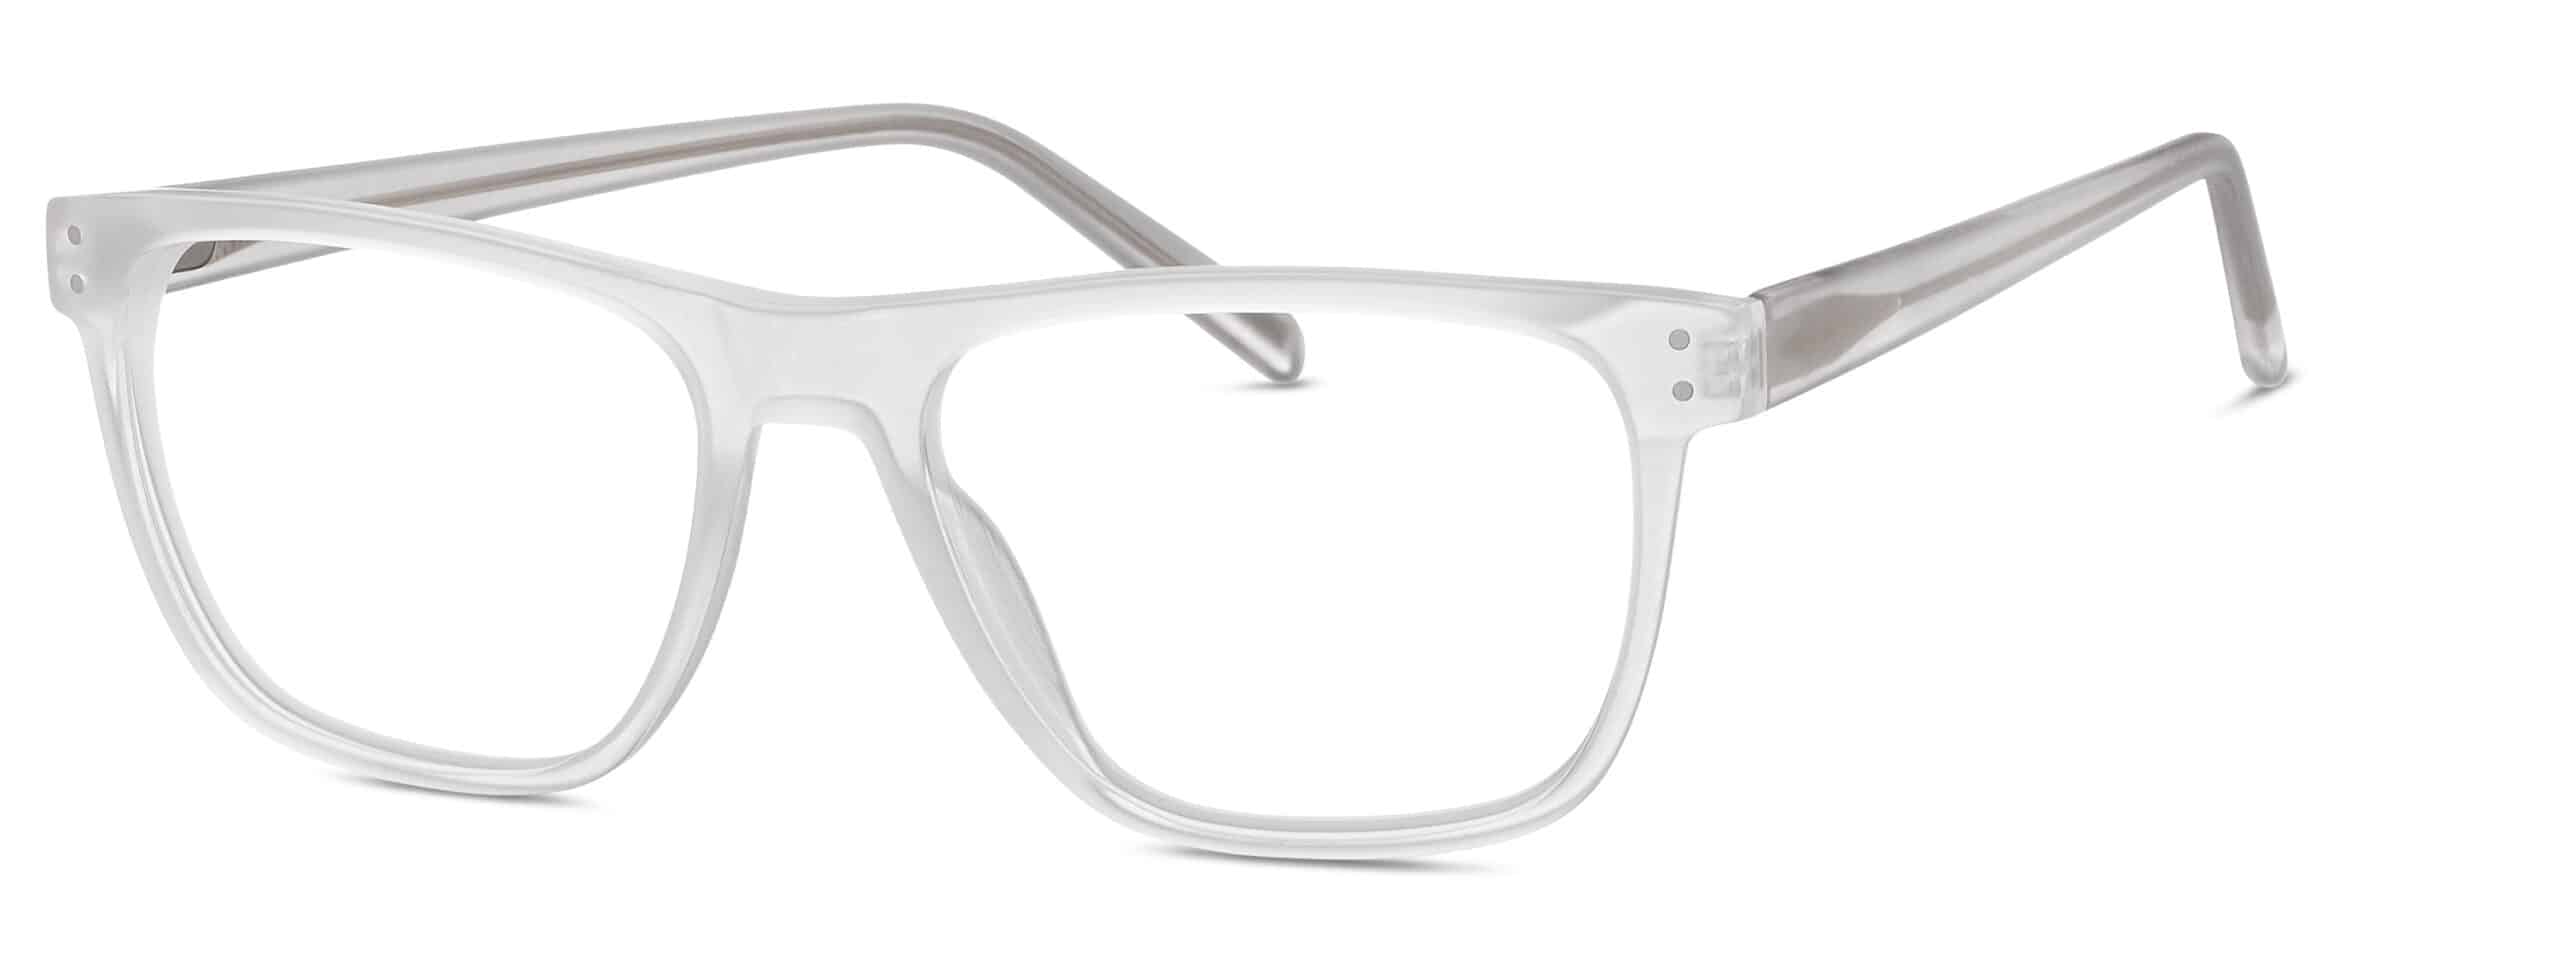 Brillen für grosse Köpfe Modell 86304 transparent matt